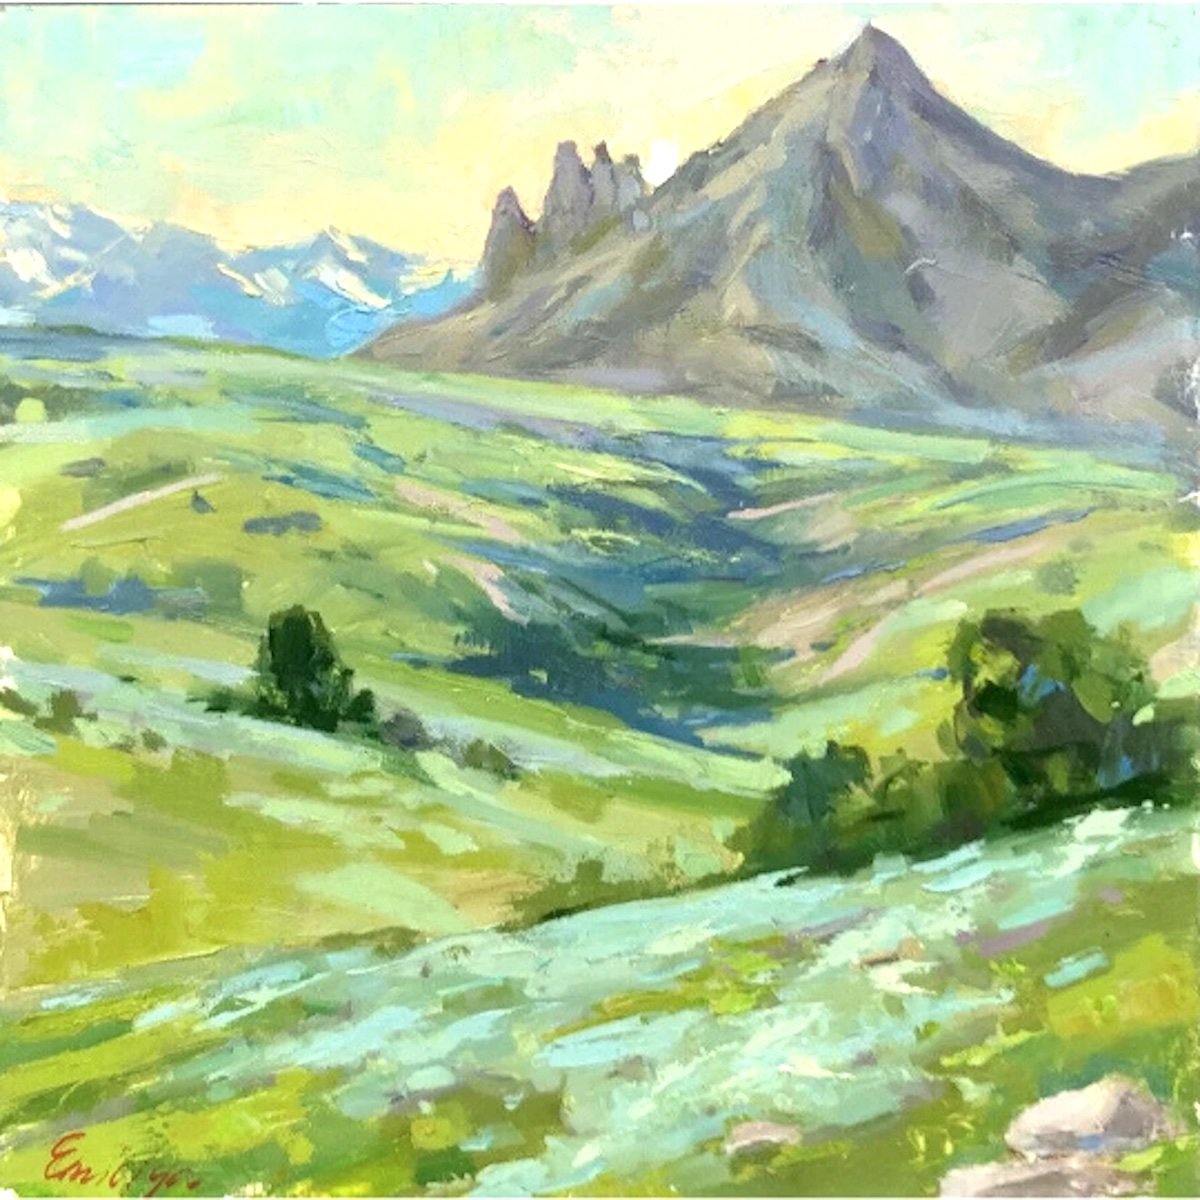 Montana Mountains original painting oil on canvas landscape impressionism art 12x12 by Emiliya Lane